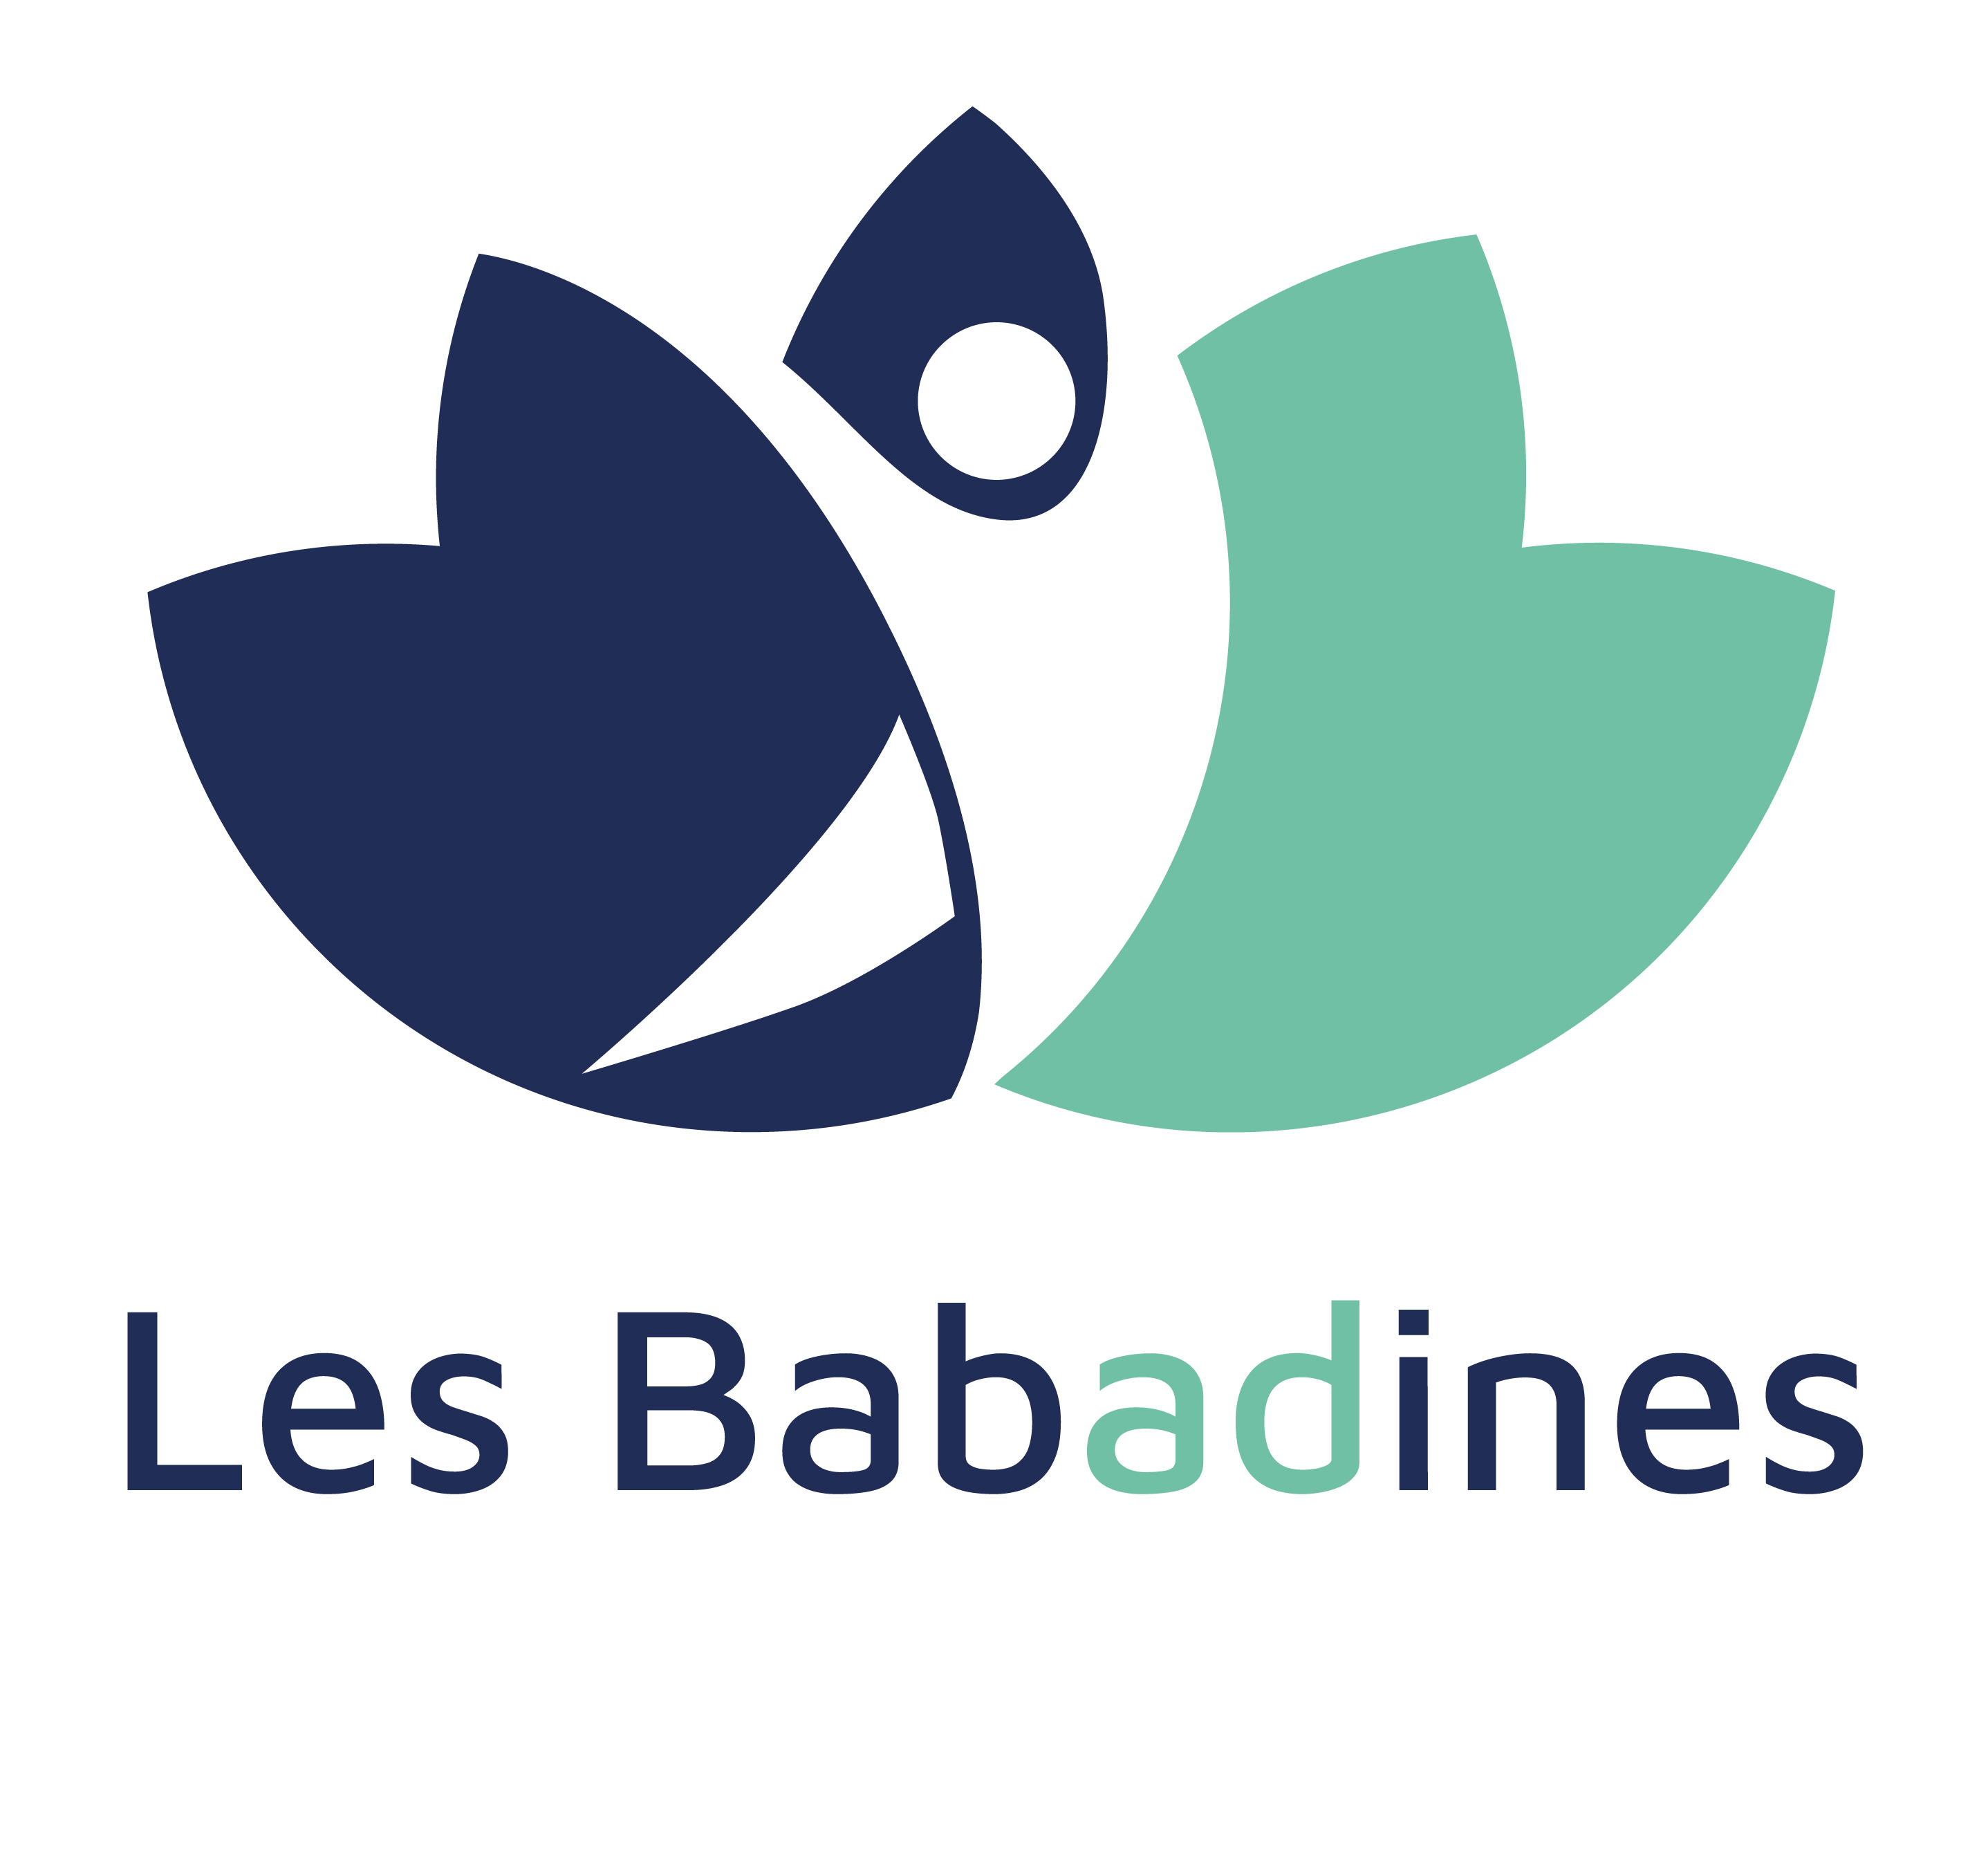 Les Babadines